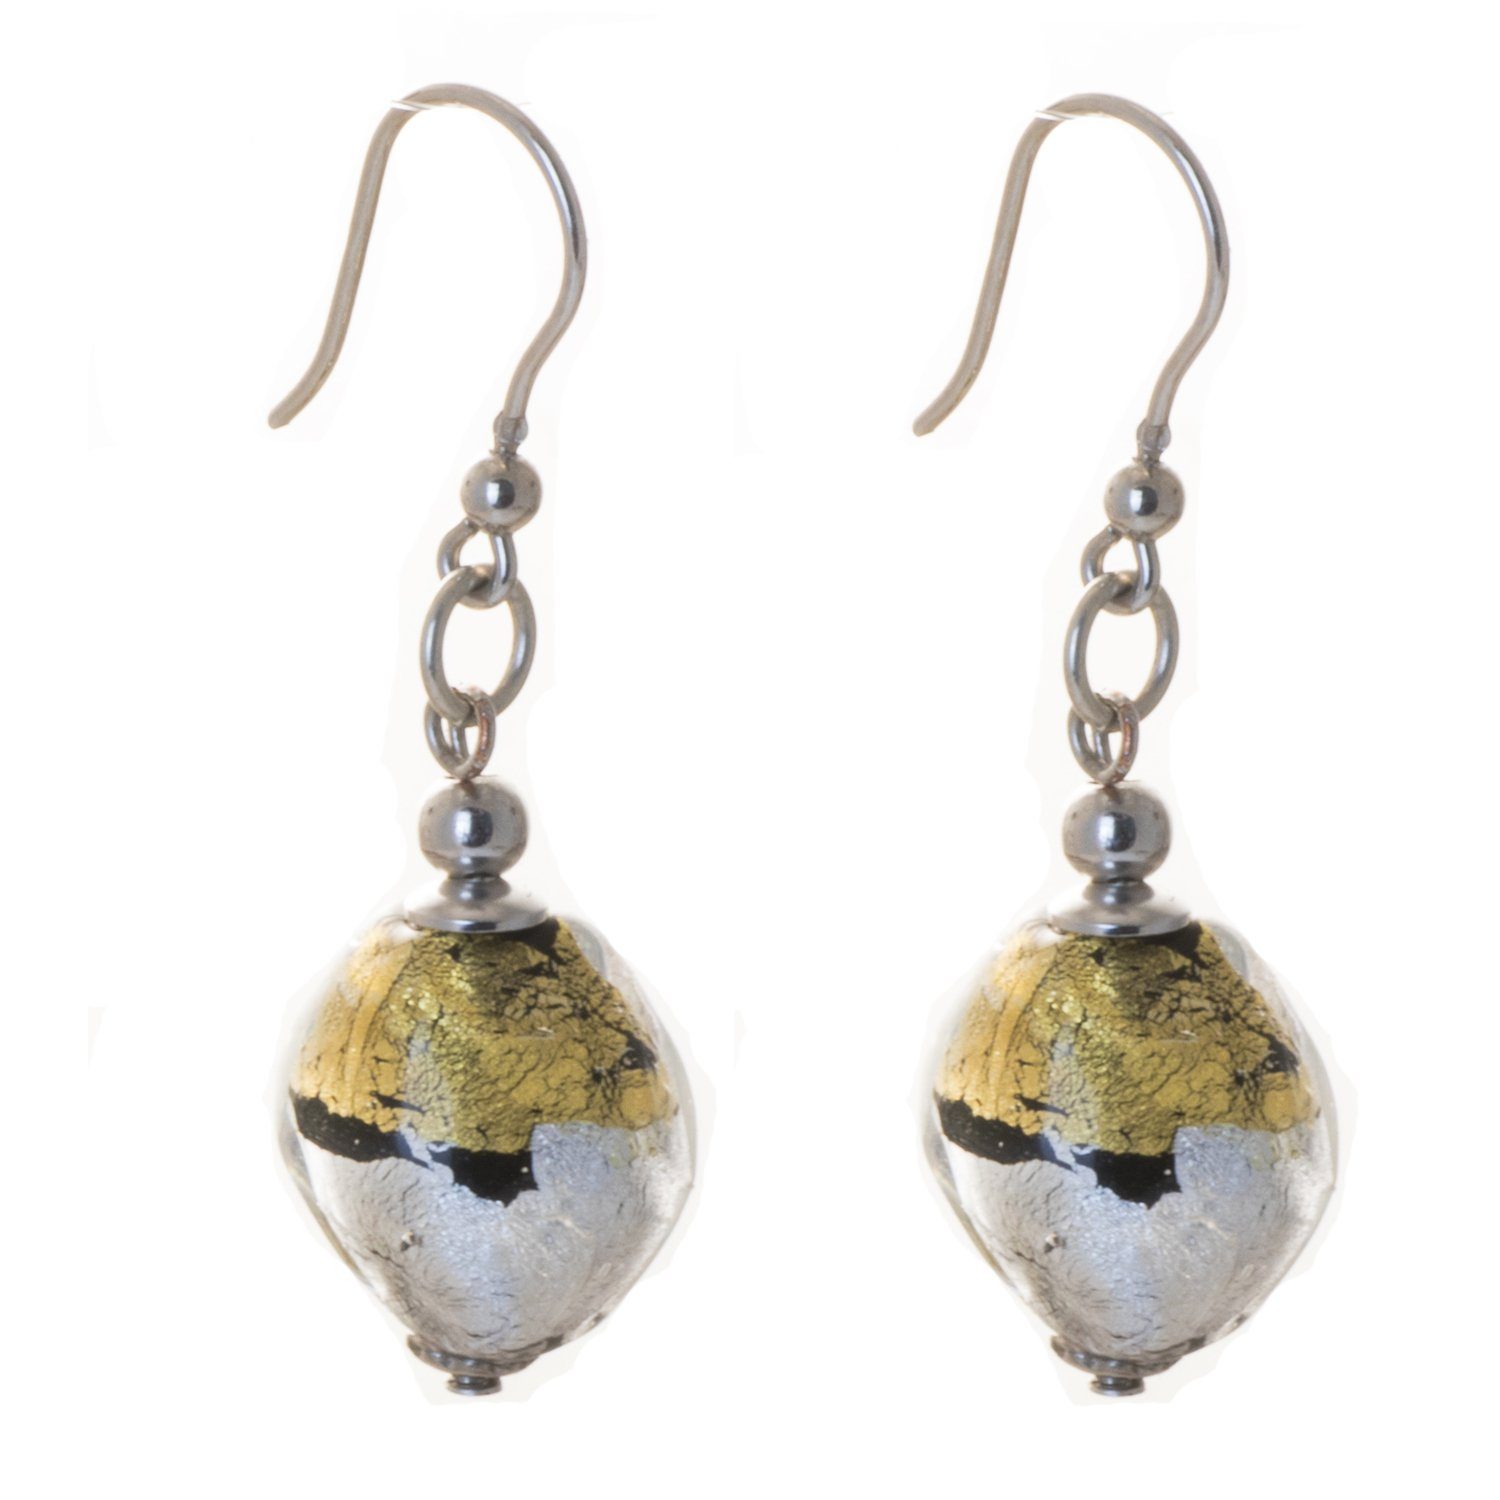 Bella Carina Paar Ohrhänger Ohrringe mit echtem Murano Glas aus Murano / Venedig gold silber 925 Silber